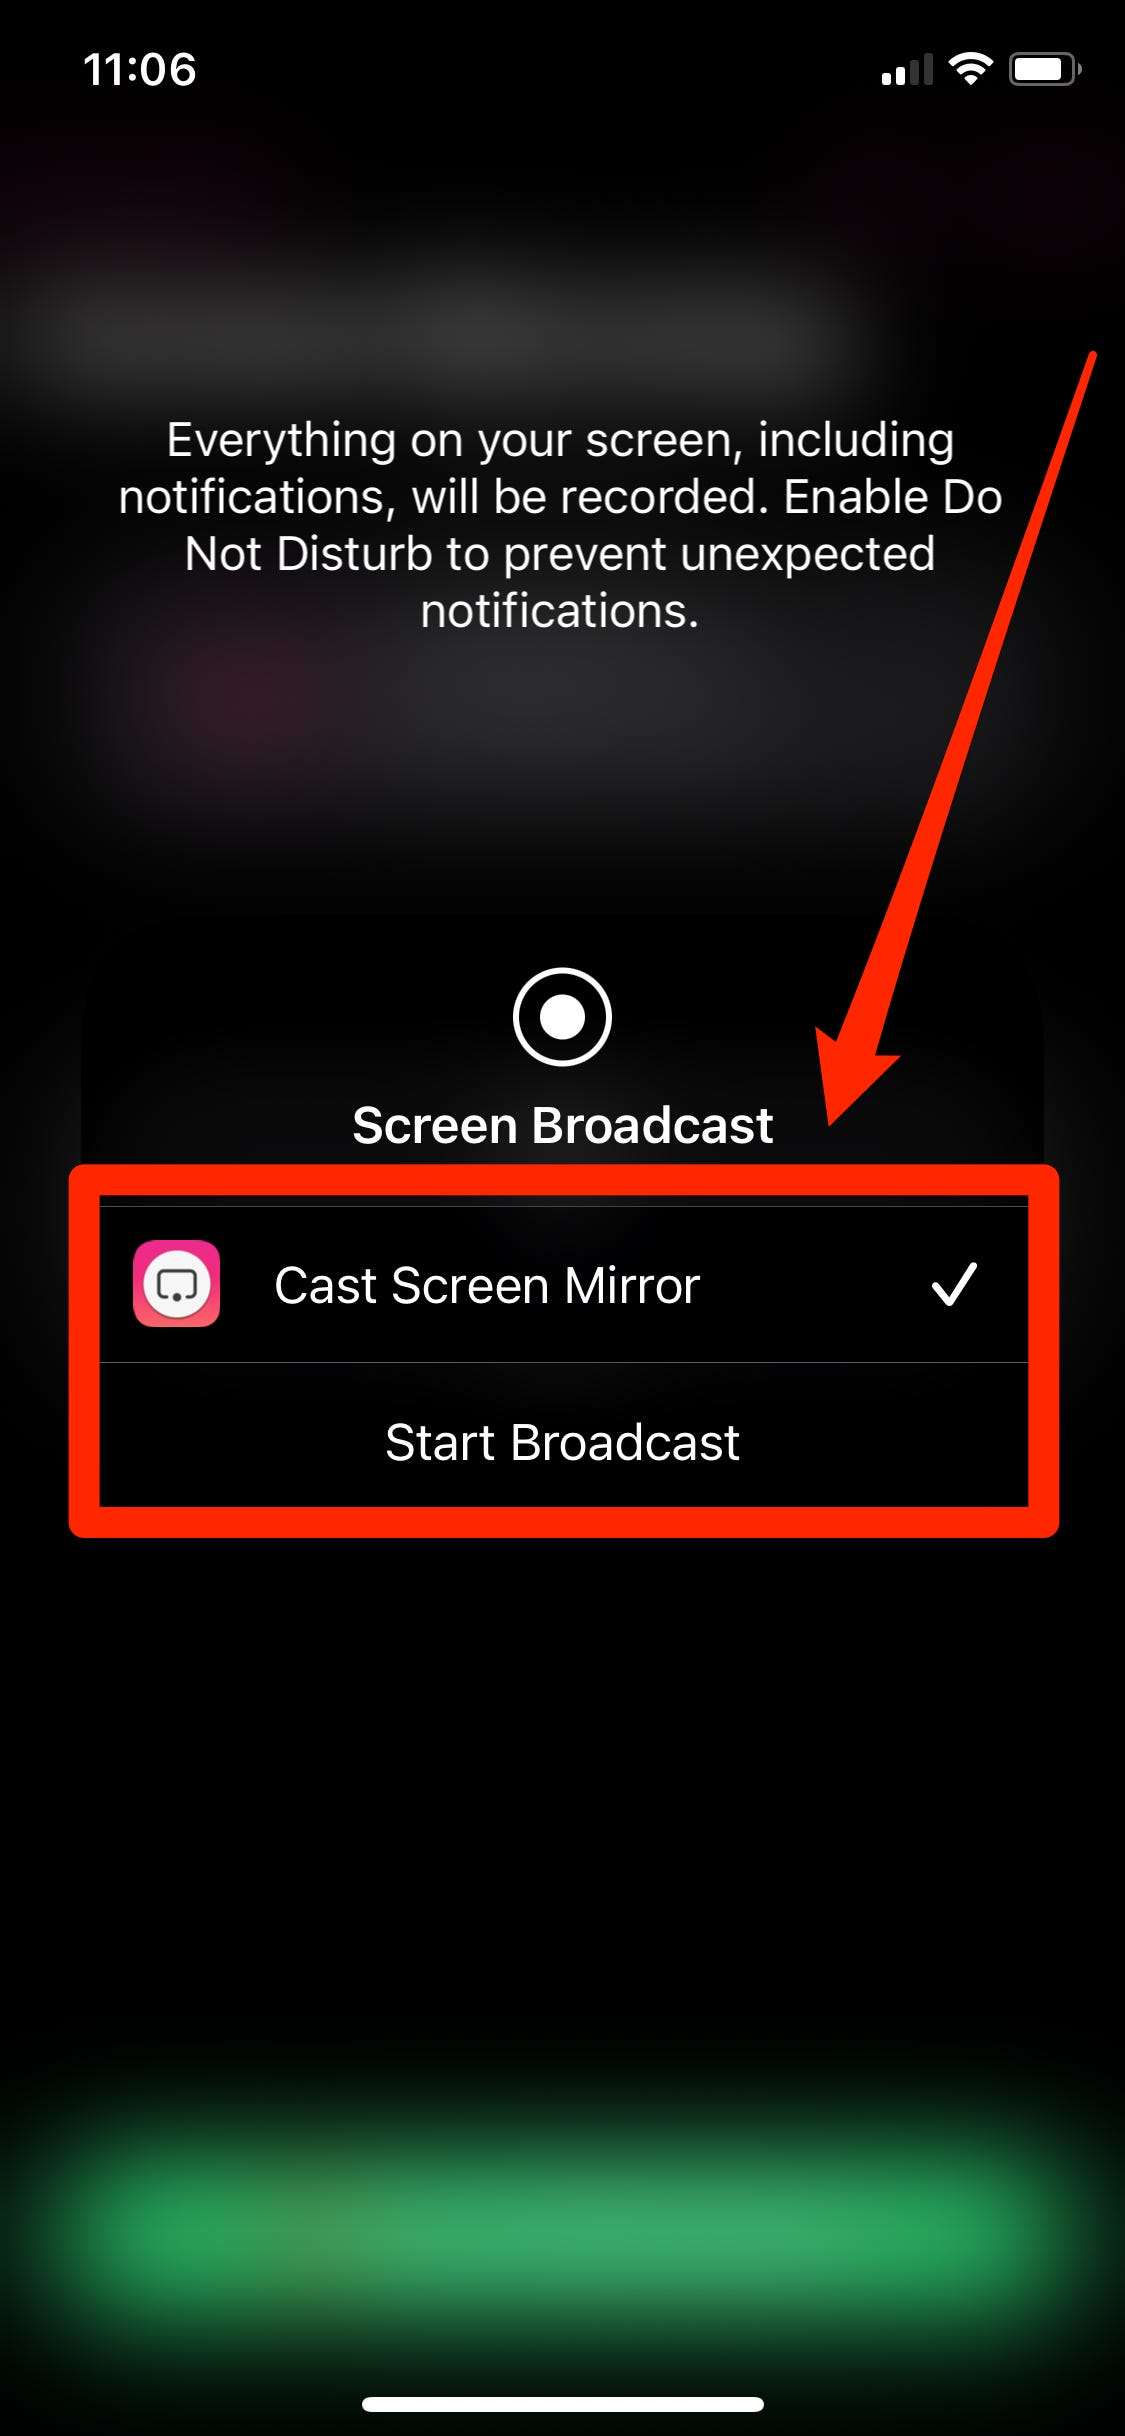 tv mirror for chromecast app